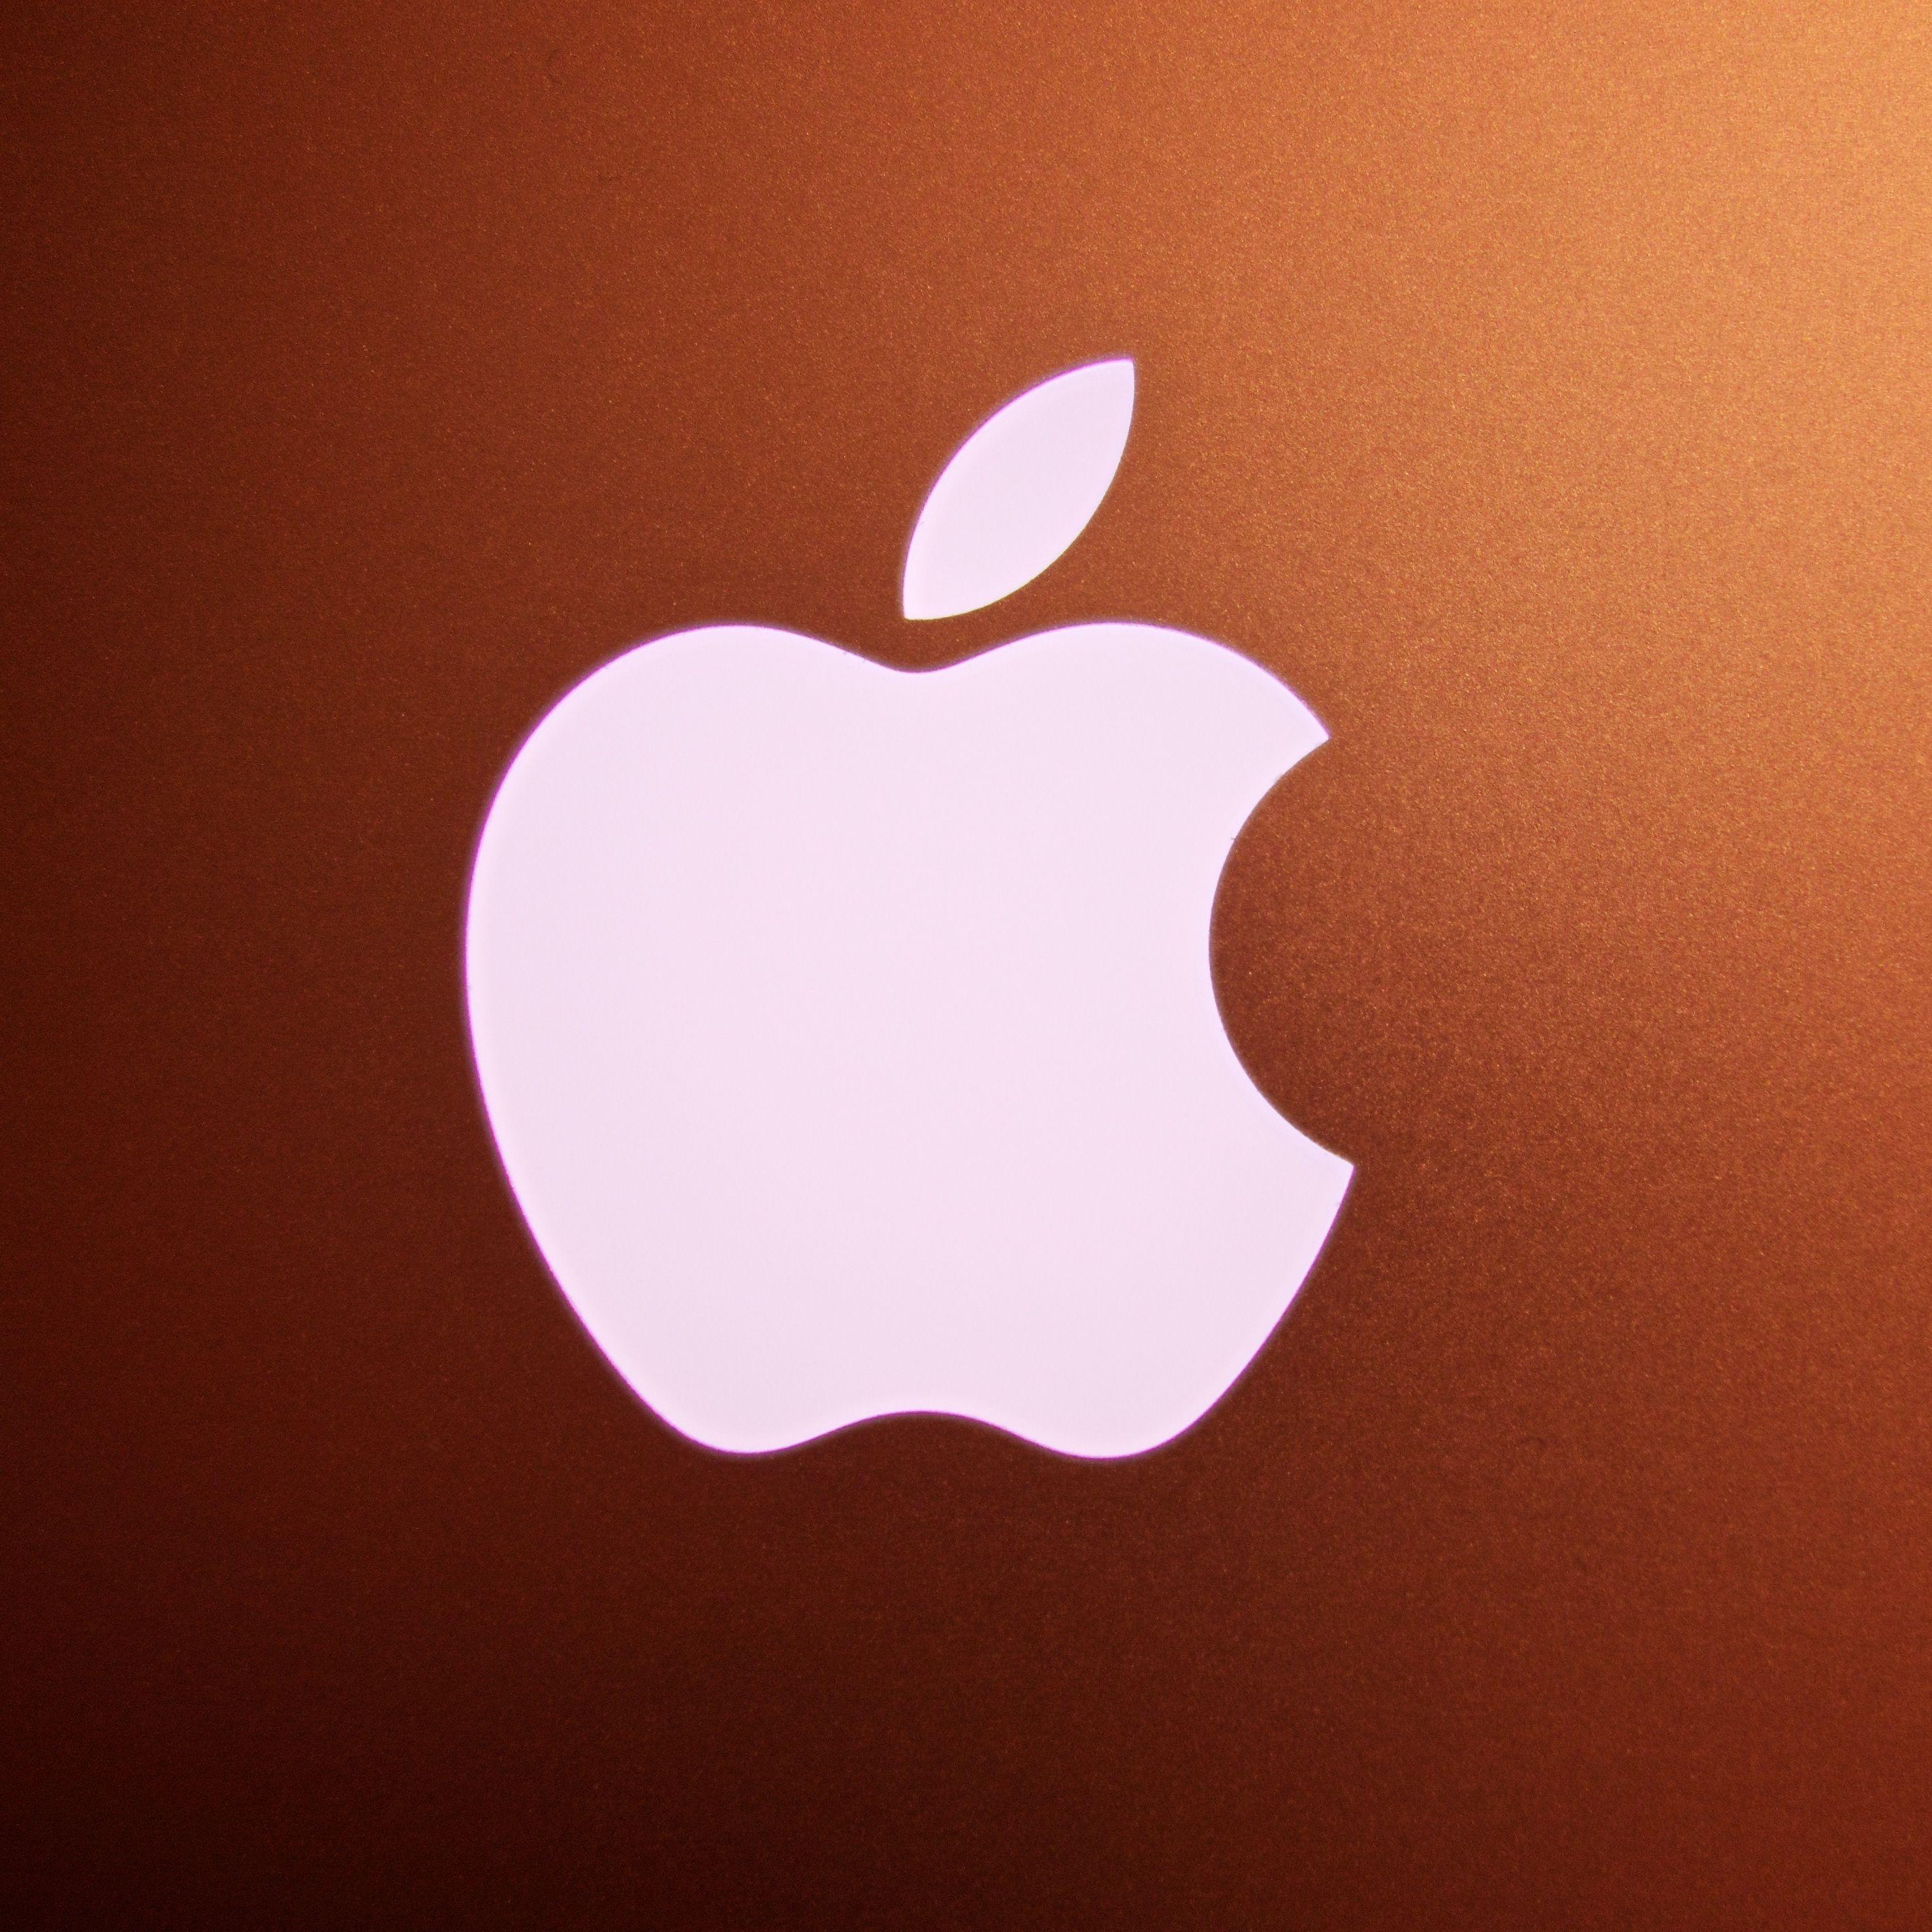 Pink Apple Logo - Apple logo, Paul Hudson, flickr (CC)sqaure - GoodElectronics